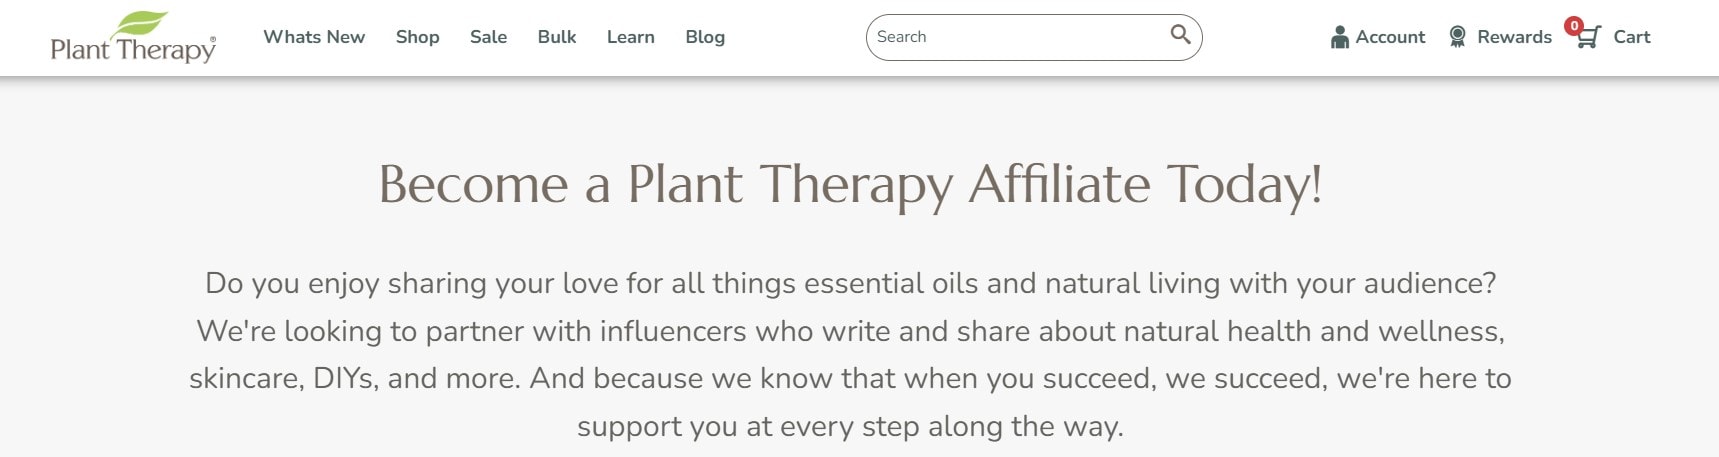 Plant Therapy Hemp Affiliate Programs 